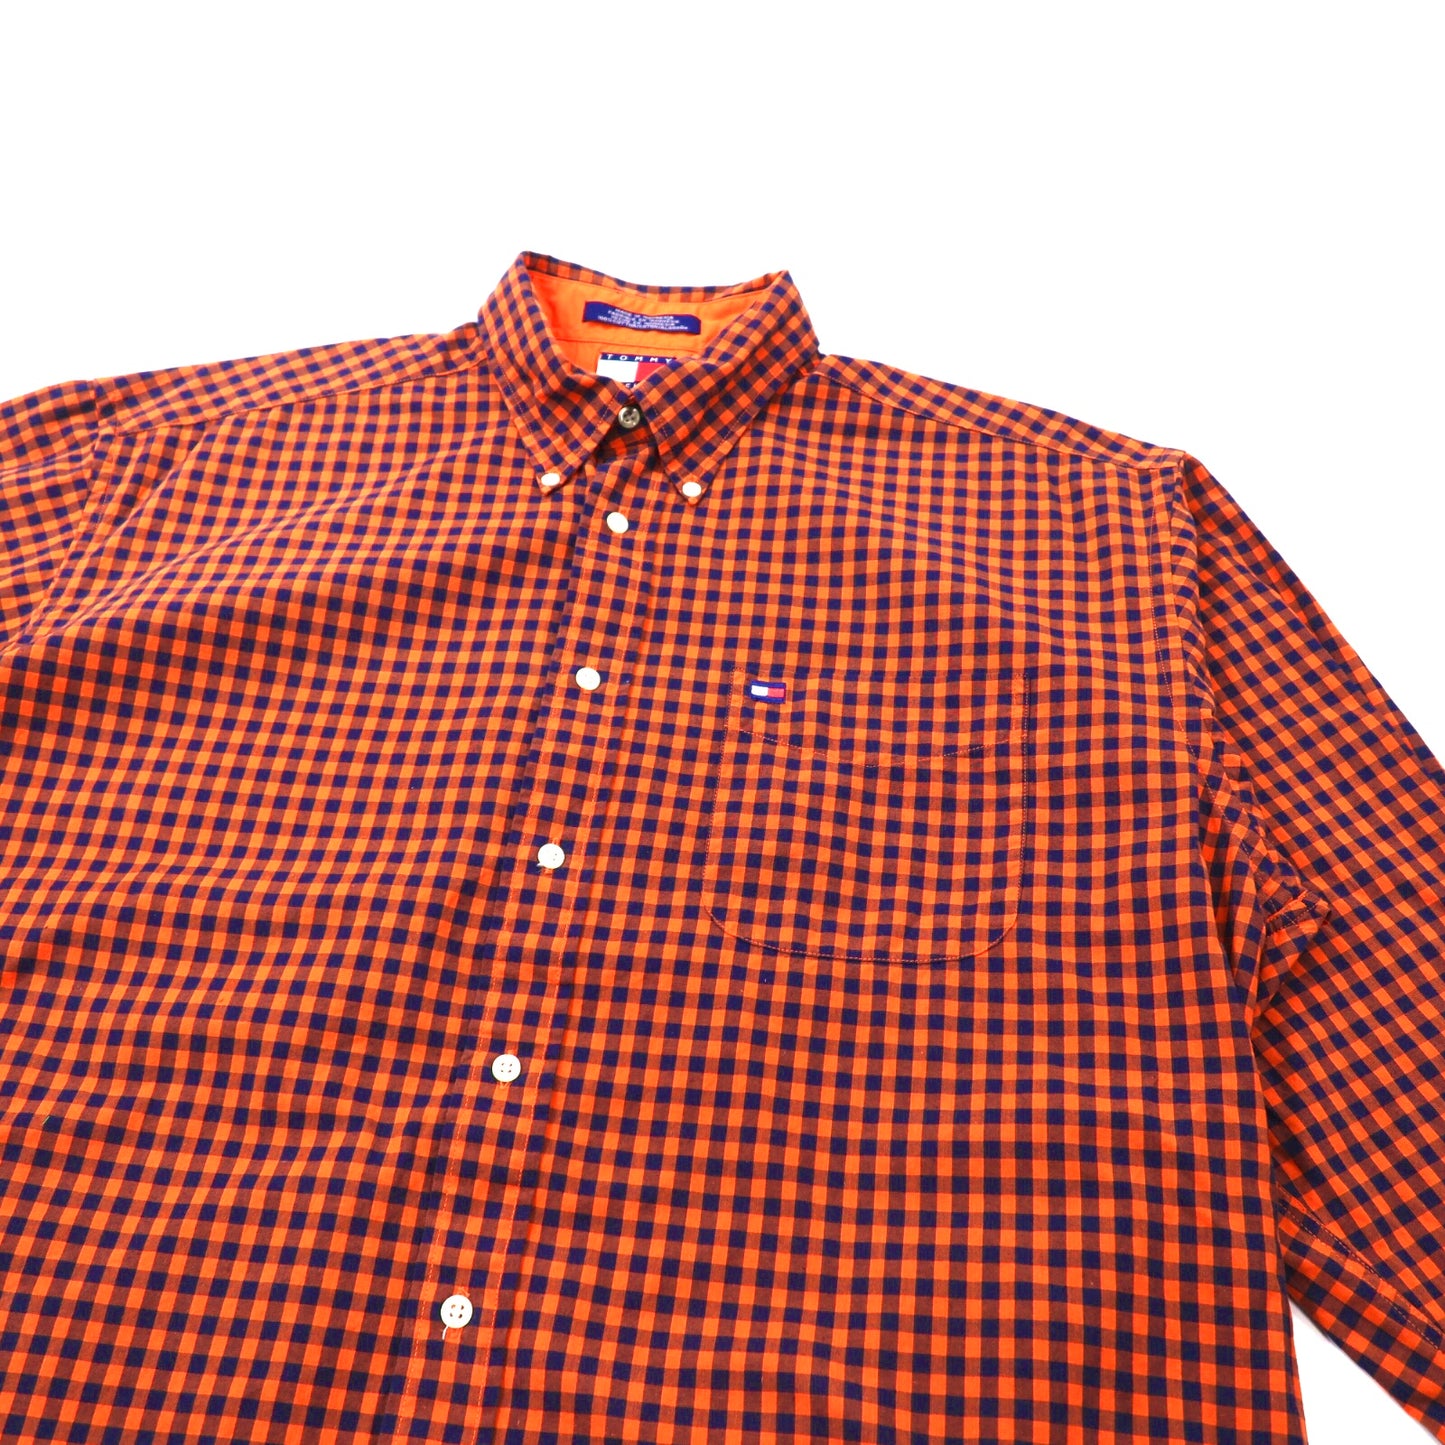 TOMMY HILFIGER ボタンダウンシャツ L オレンジ ギンガムチェック コットン ビッグサイズ